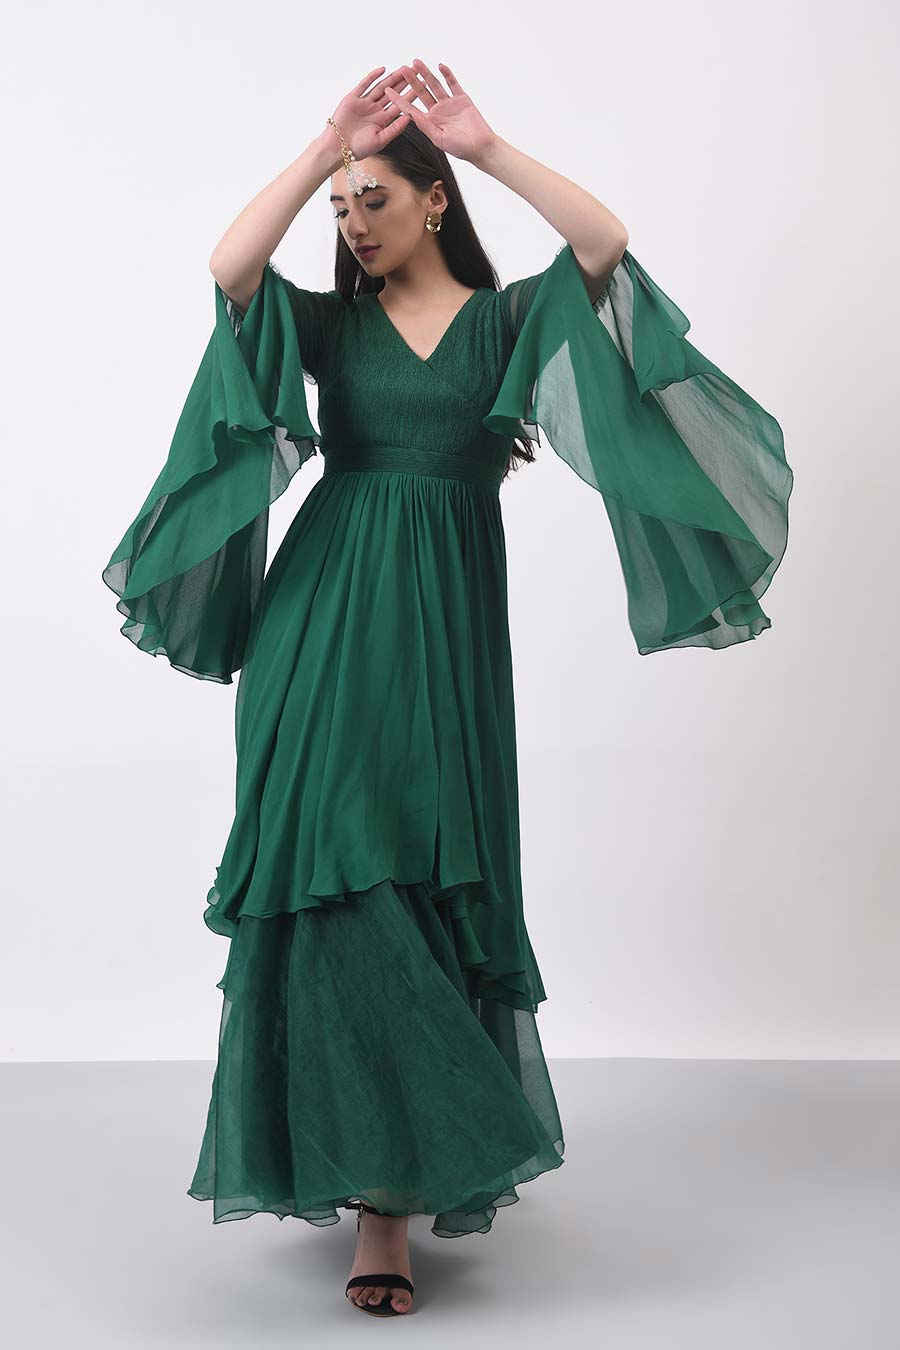 Green Layered Dress